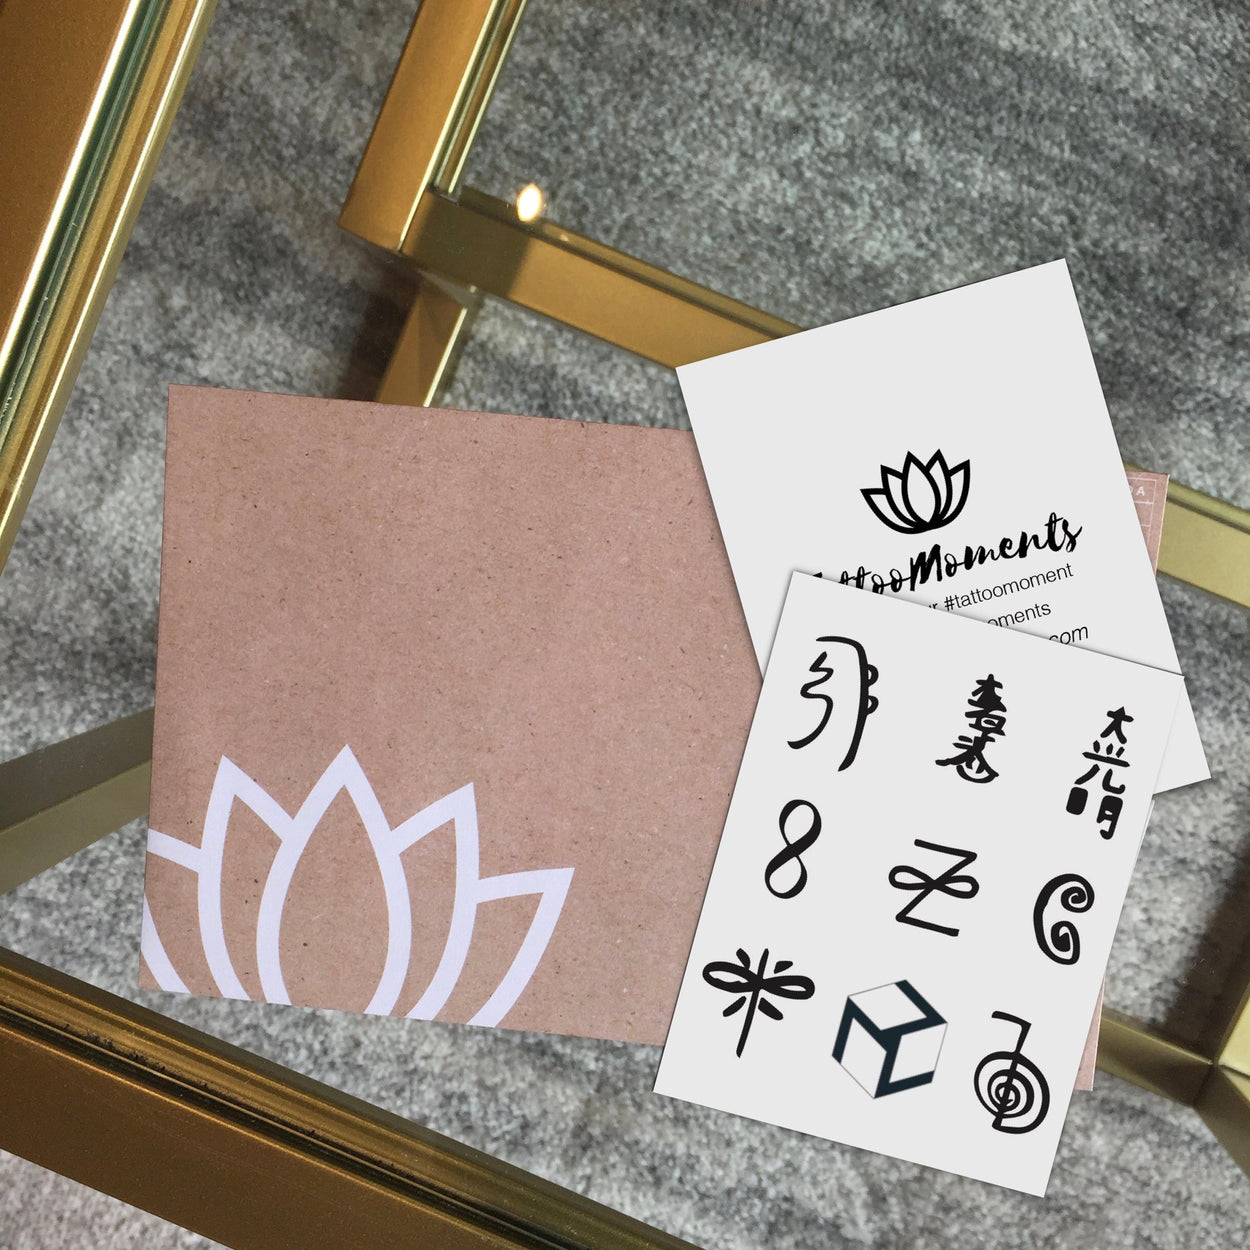 Reiki Symbols Tattoos | Spiritual healing and relaxing pack of 18 temporary tattoos (Now with Antahkarana)